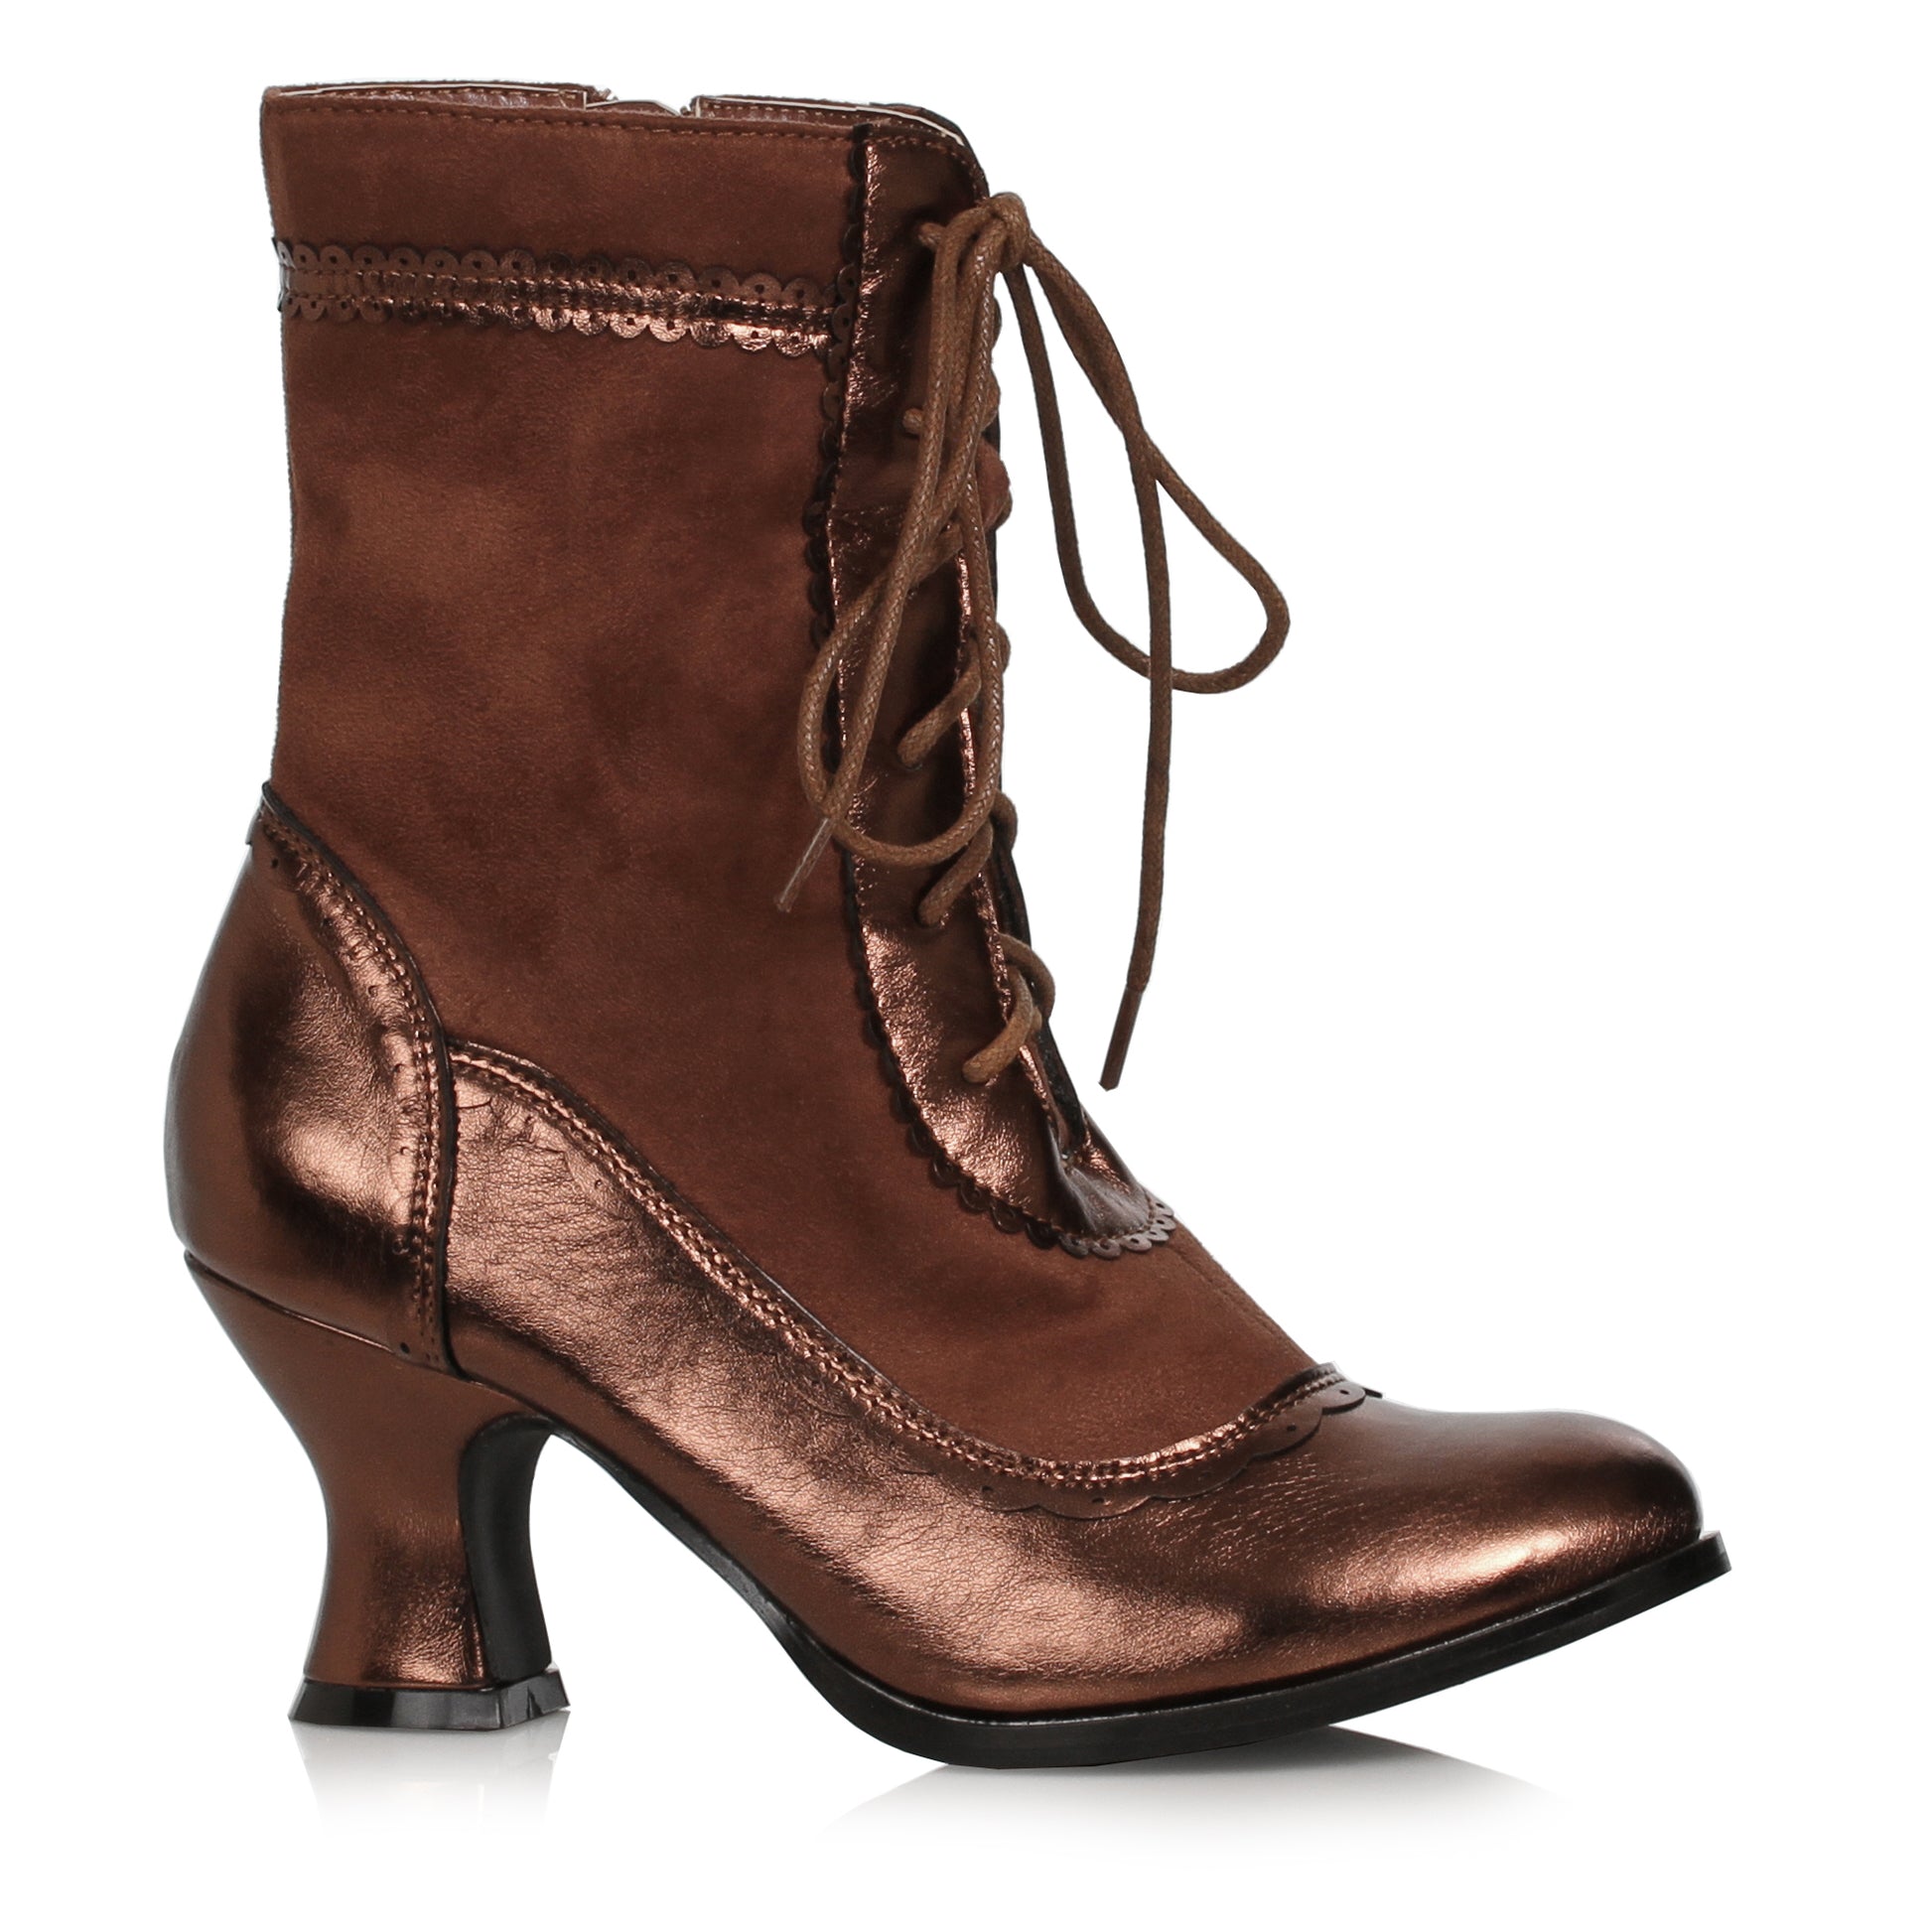 253-KITTY Ellie Shoes 2.5"” Heel Women’s Victorian Boot ANKLE BOOT 2 INCH HEEL